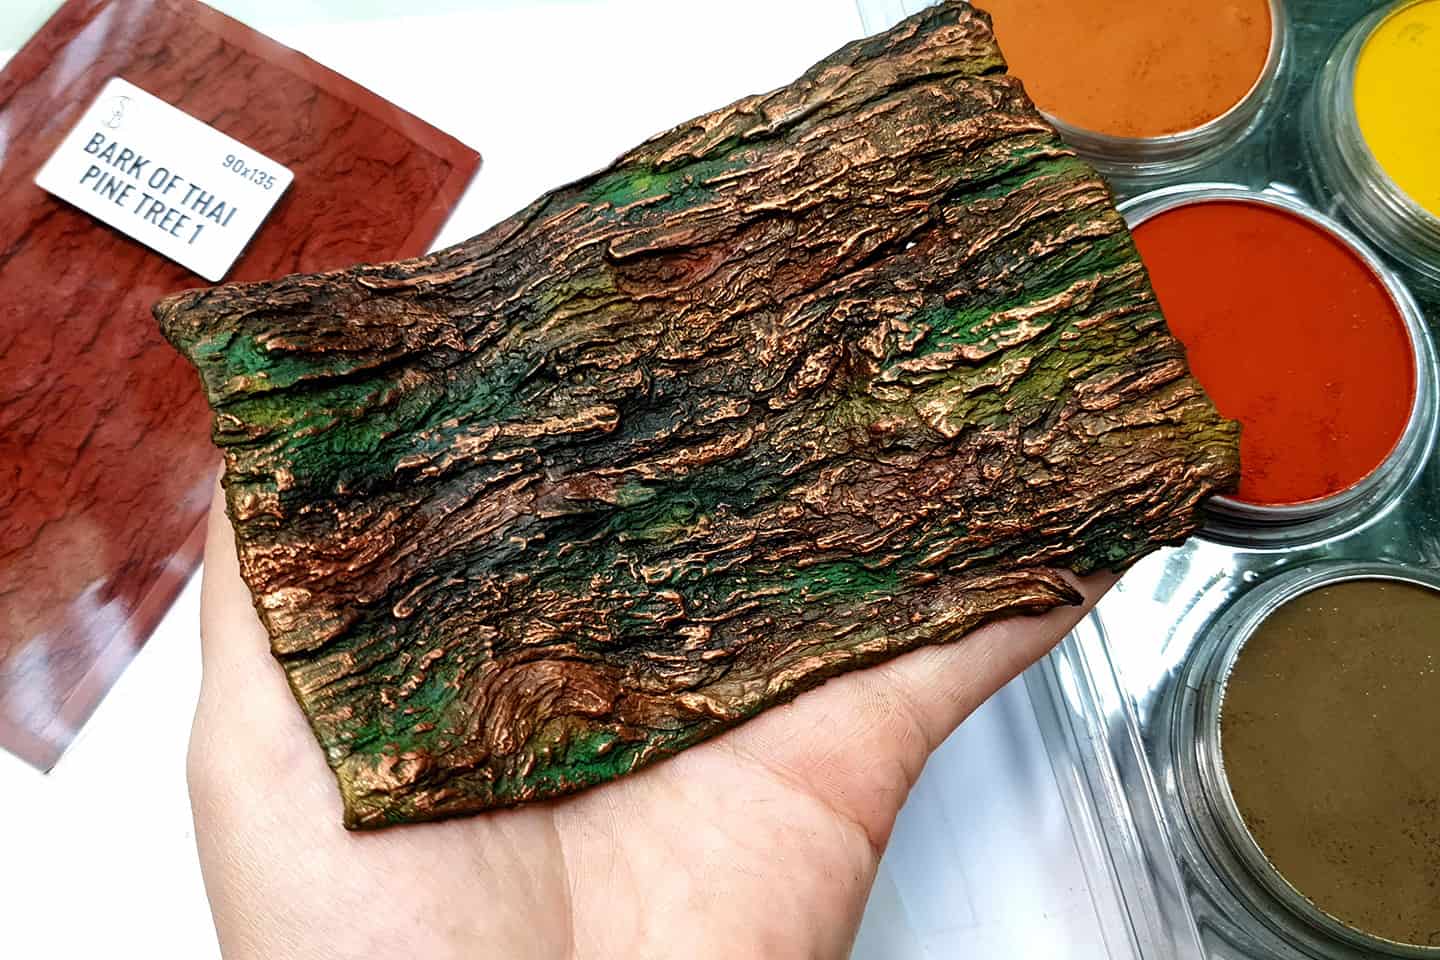 Silicone Texture Bark of Thai Pine Tree #1 (13119)